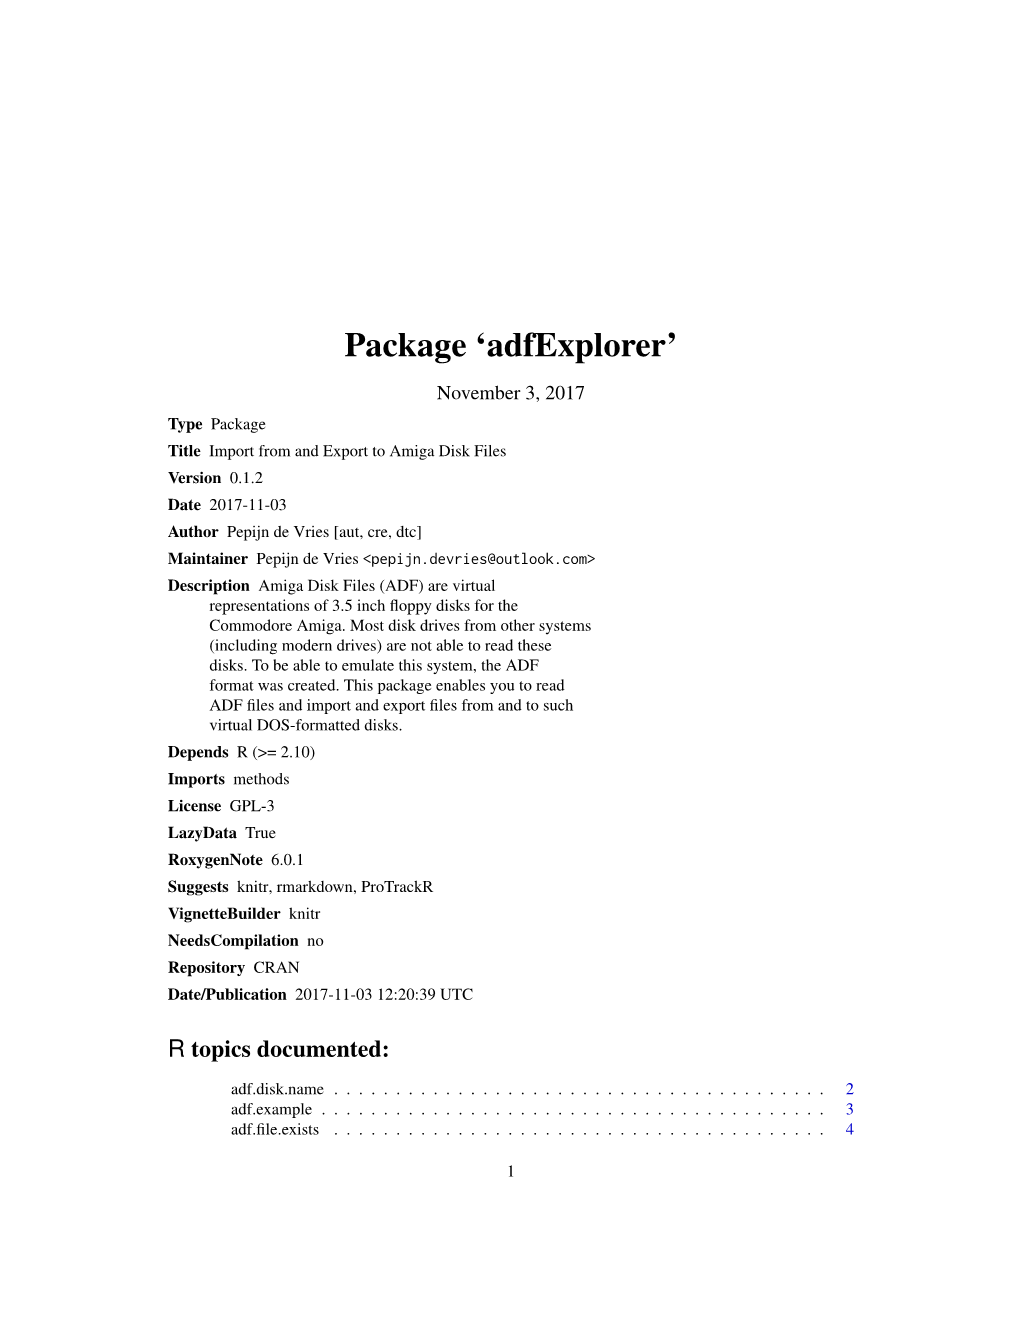 Package 'Adfexplorer'